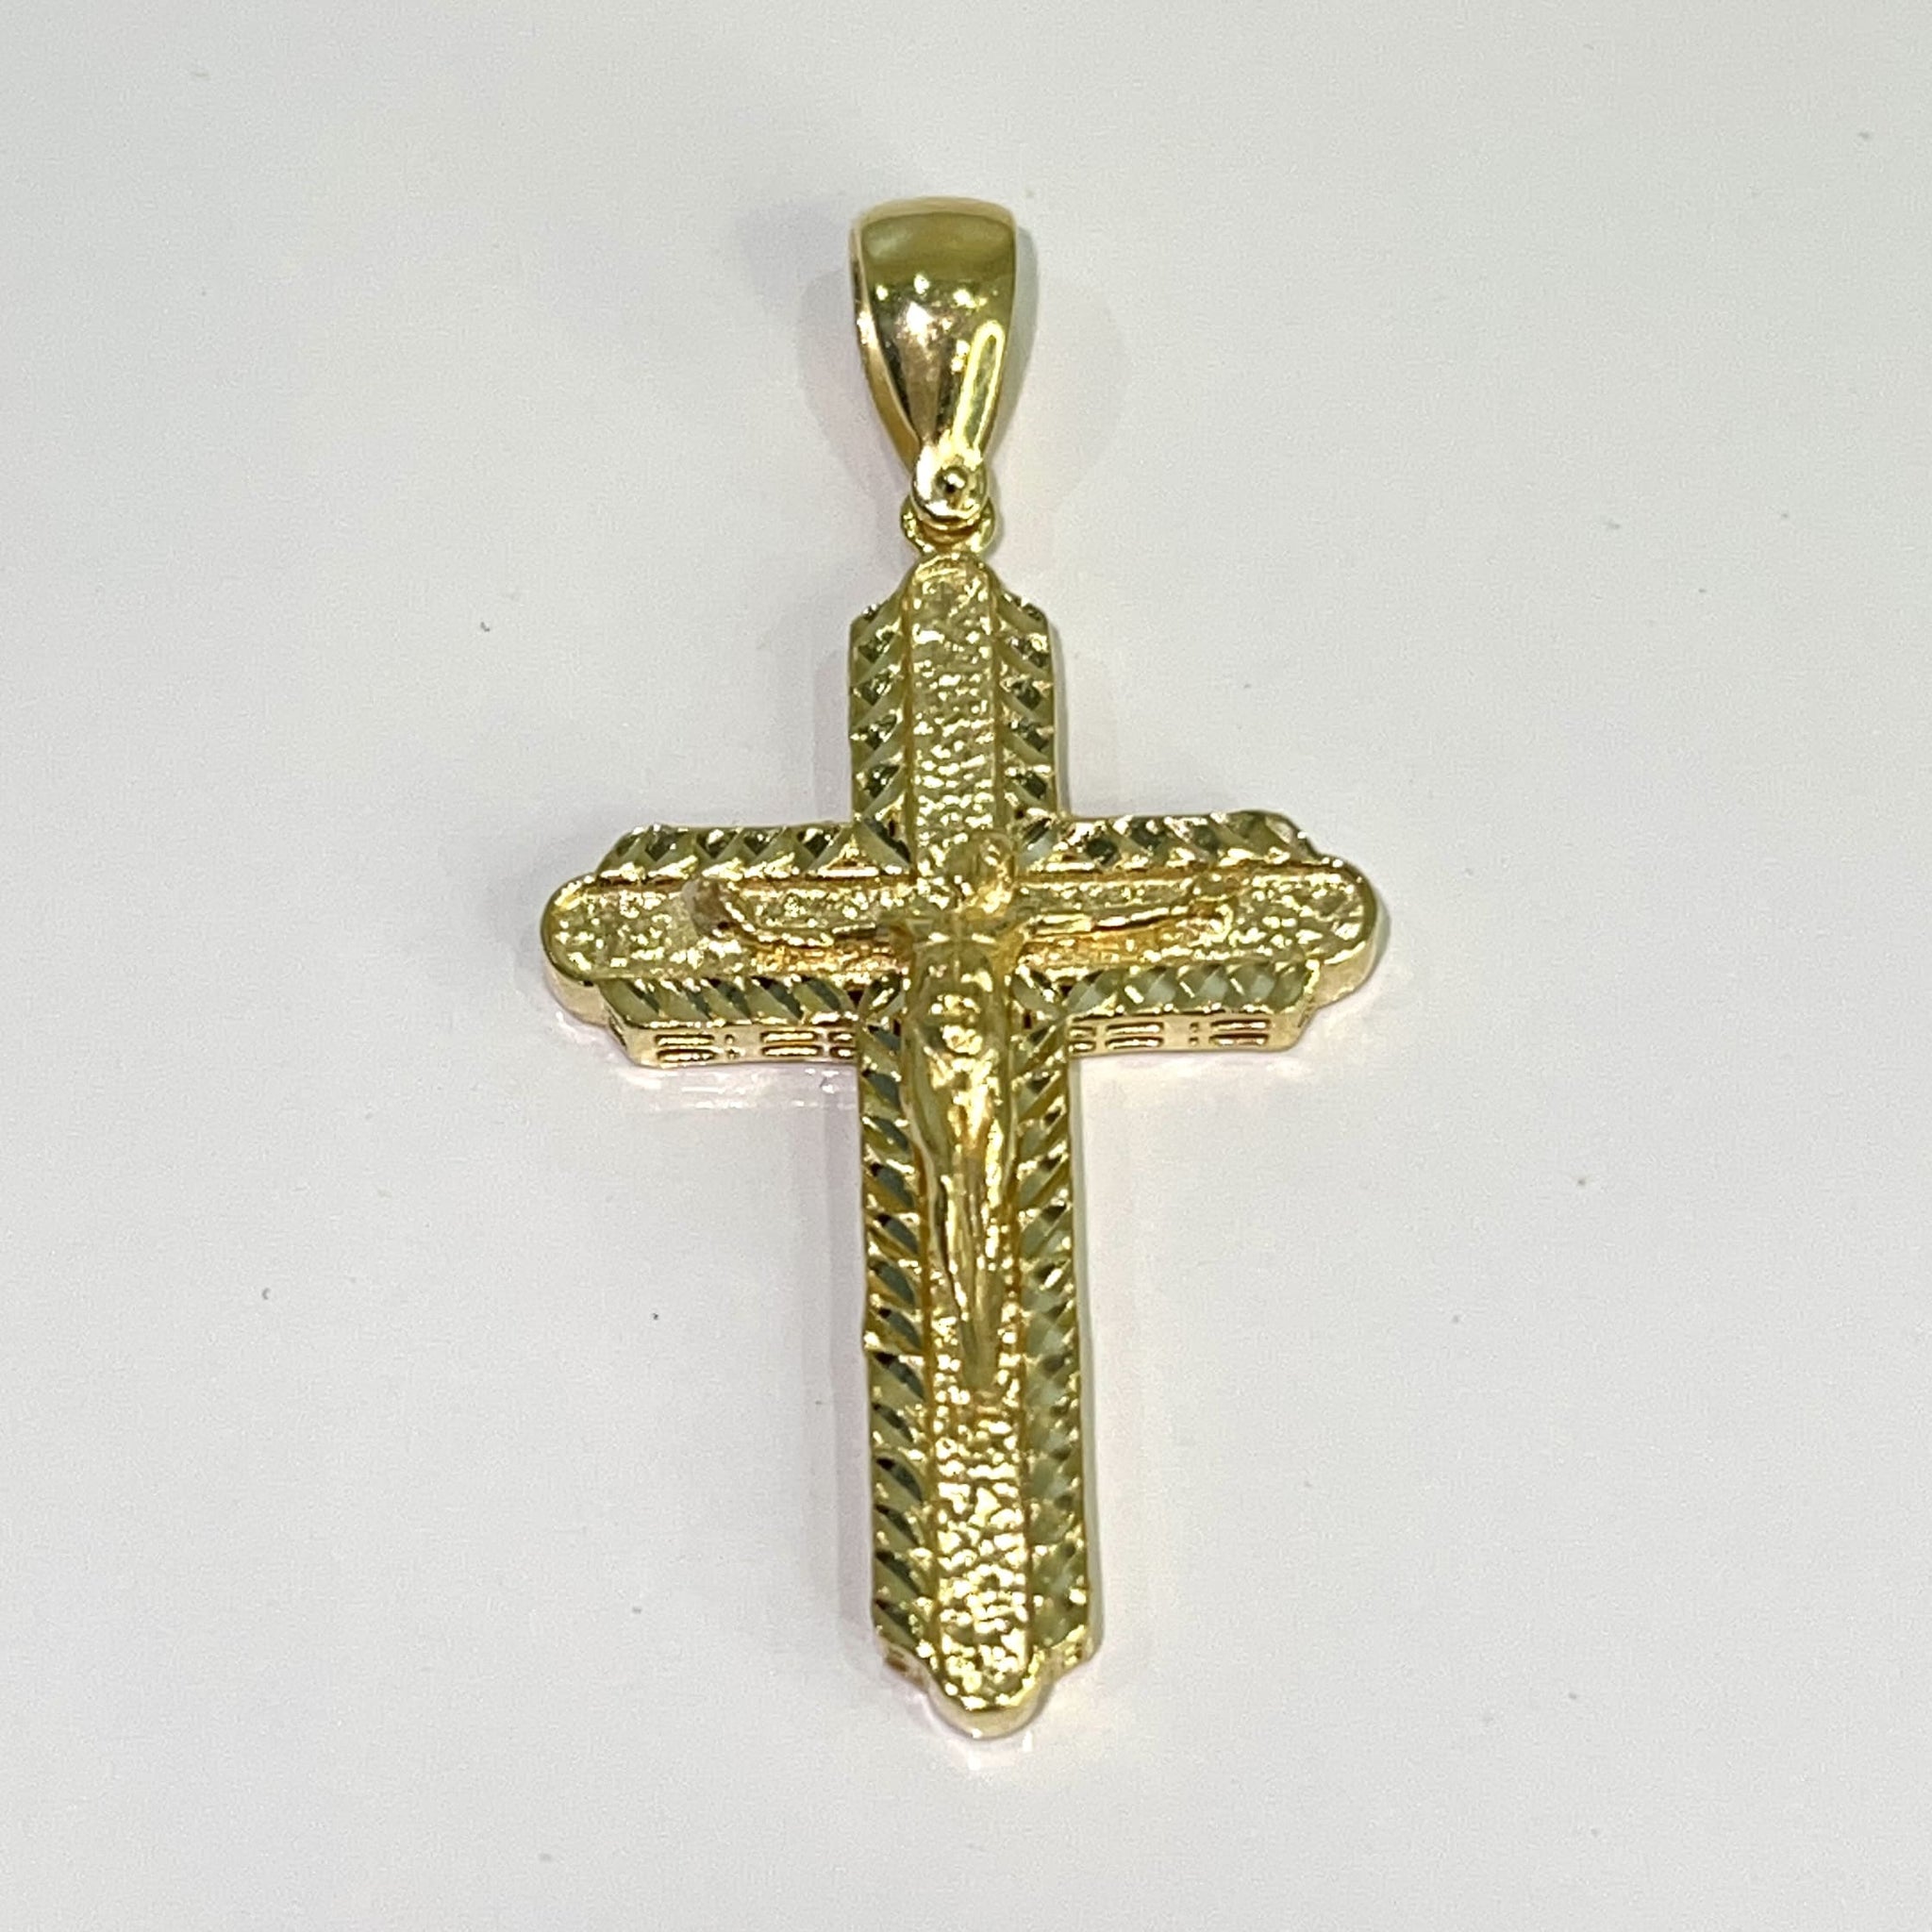 Cross Pendant With Jesus - 14 Carat Gold - 275